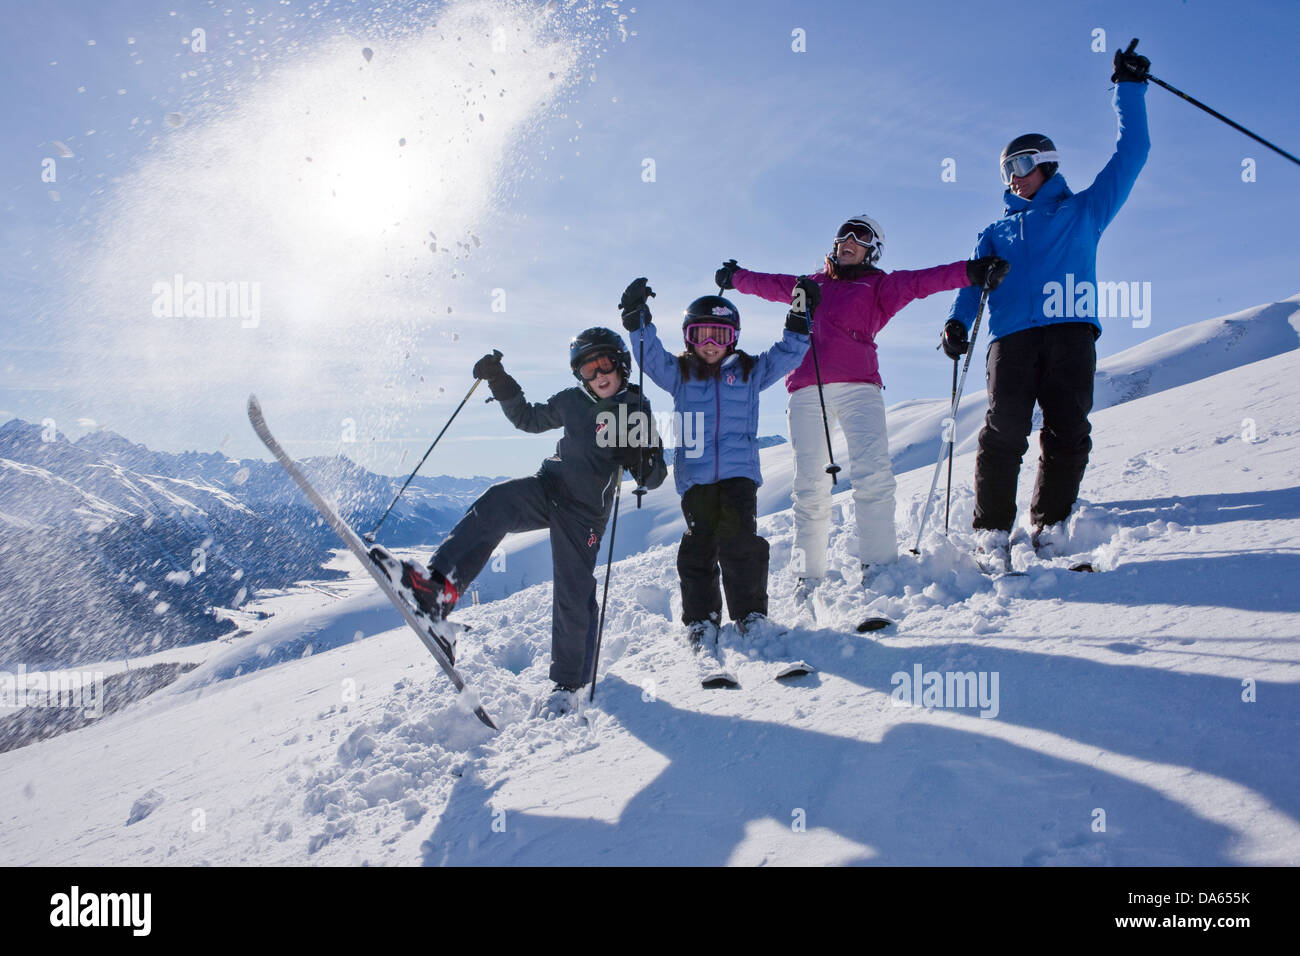 Family, skiing, winter sports, Zuoz, family, ski, skiing, winter sports, Carving, winter, winter sports, canton, GR, Graubünden, Stock Photo